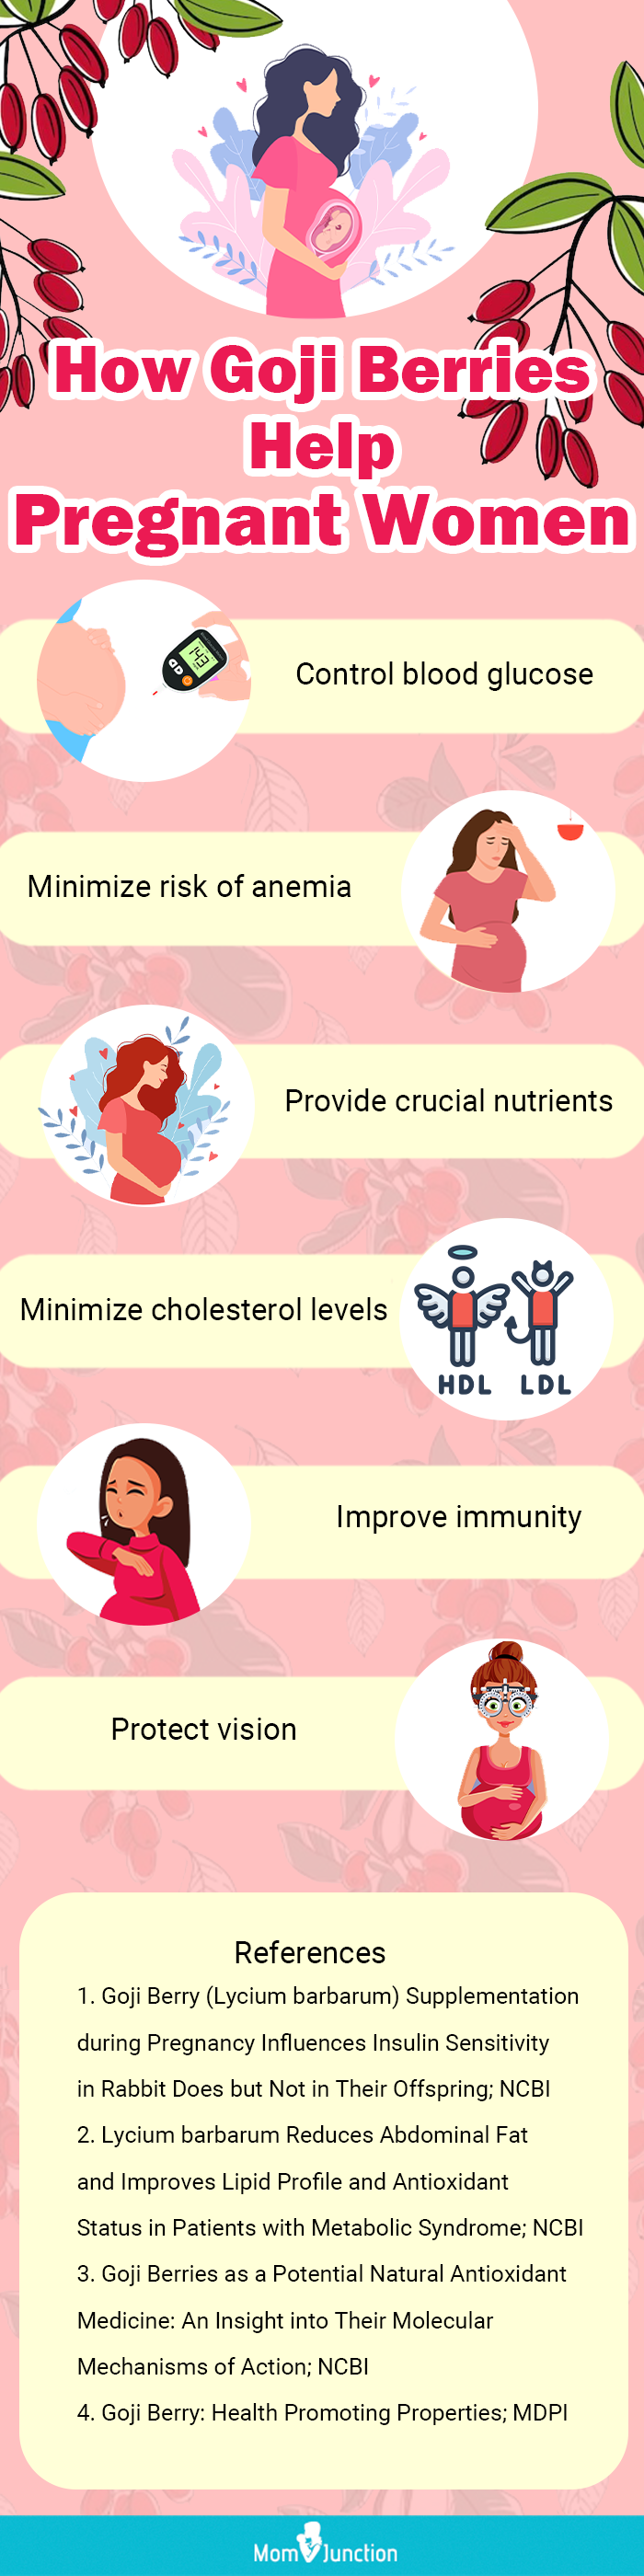 how goji berries help pregnant women (infographic)